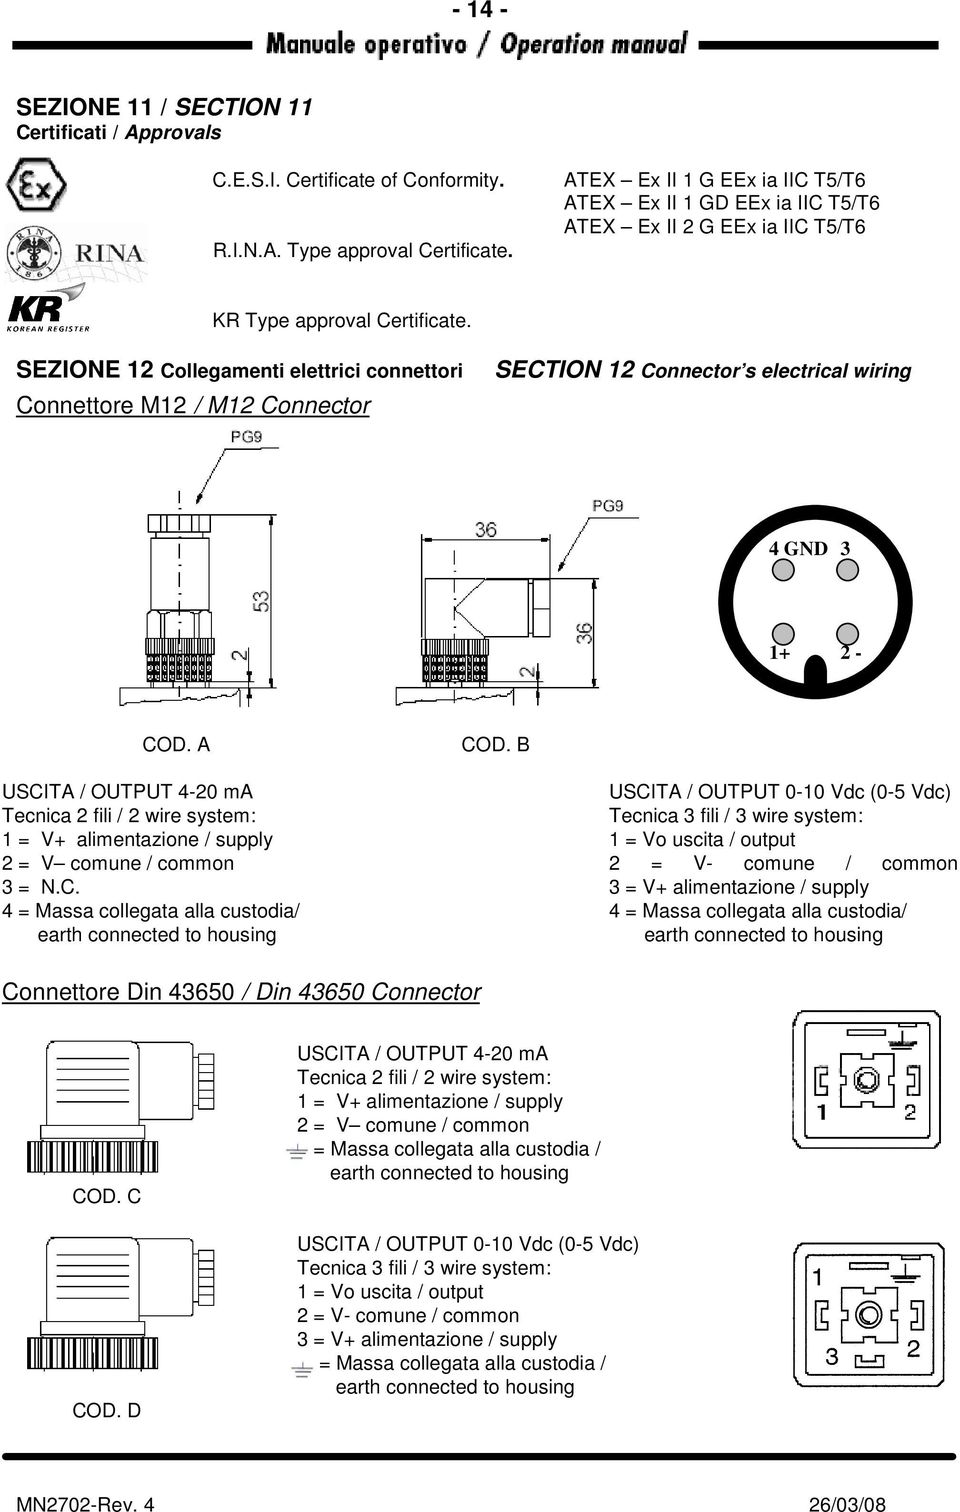 SEZIONE 12 Collegamenti elettrici connettori Connettore M12 / M12 Connector SECTION 12 Connector s electrical wiring 4 GND 3 3 1+ 2 - COD. A COD.